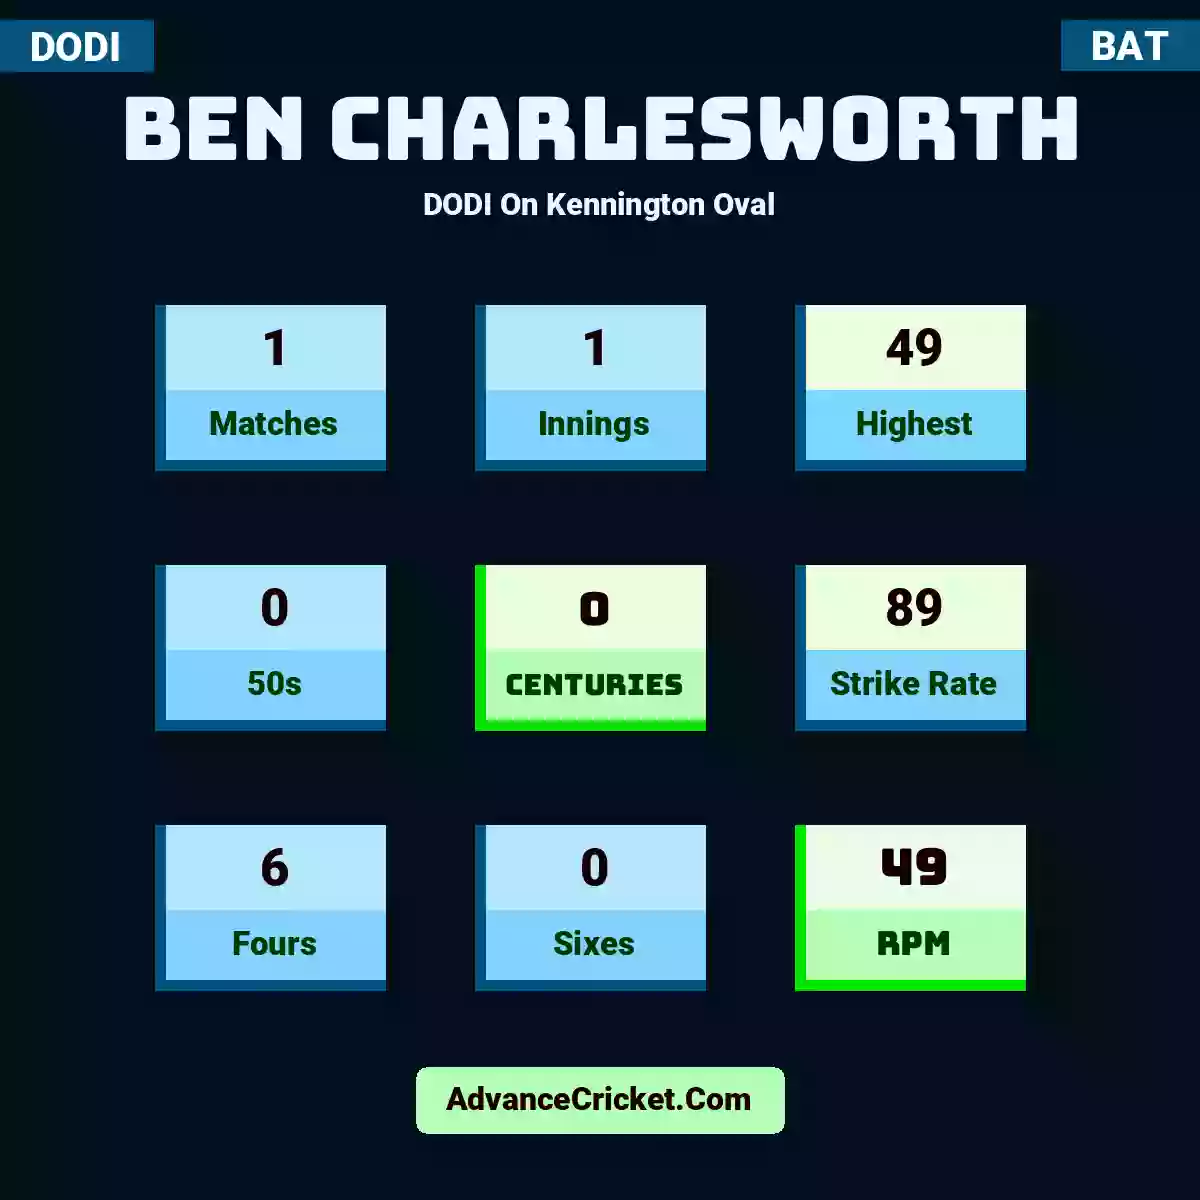 Ben Charlesworth DODI  On Kennington Oval, Ben Charlesworth played 1 matches, scored 49 runs as highest, 0 half-centuries, and 0 centuries, with a strike rate of 89. B.Charlesworth hit 6 fours and 0 sixes, with an RPM of 49.